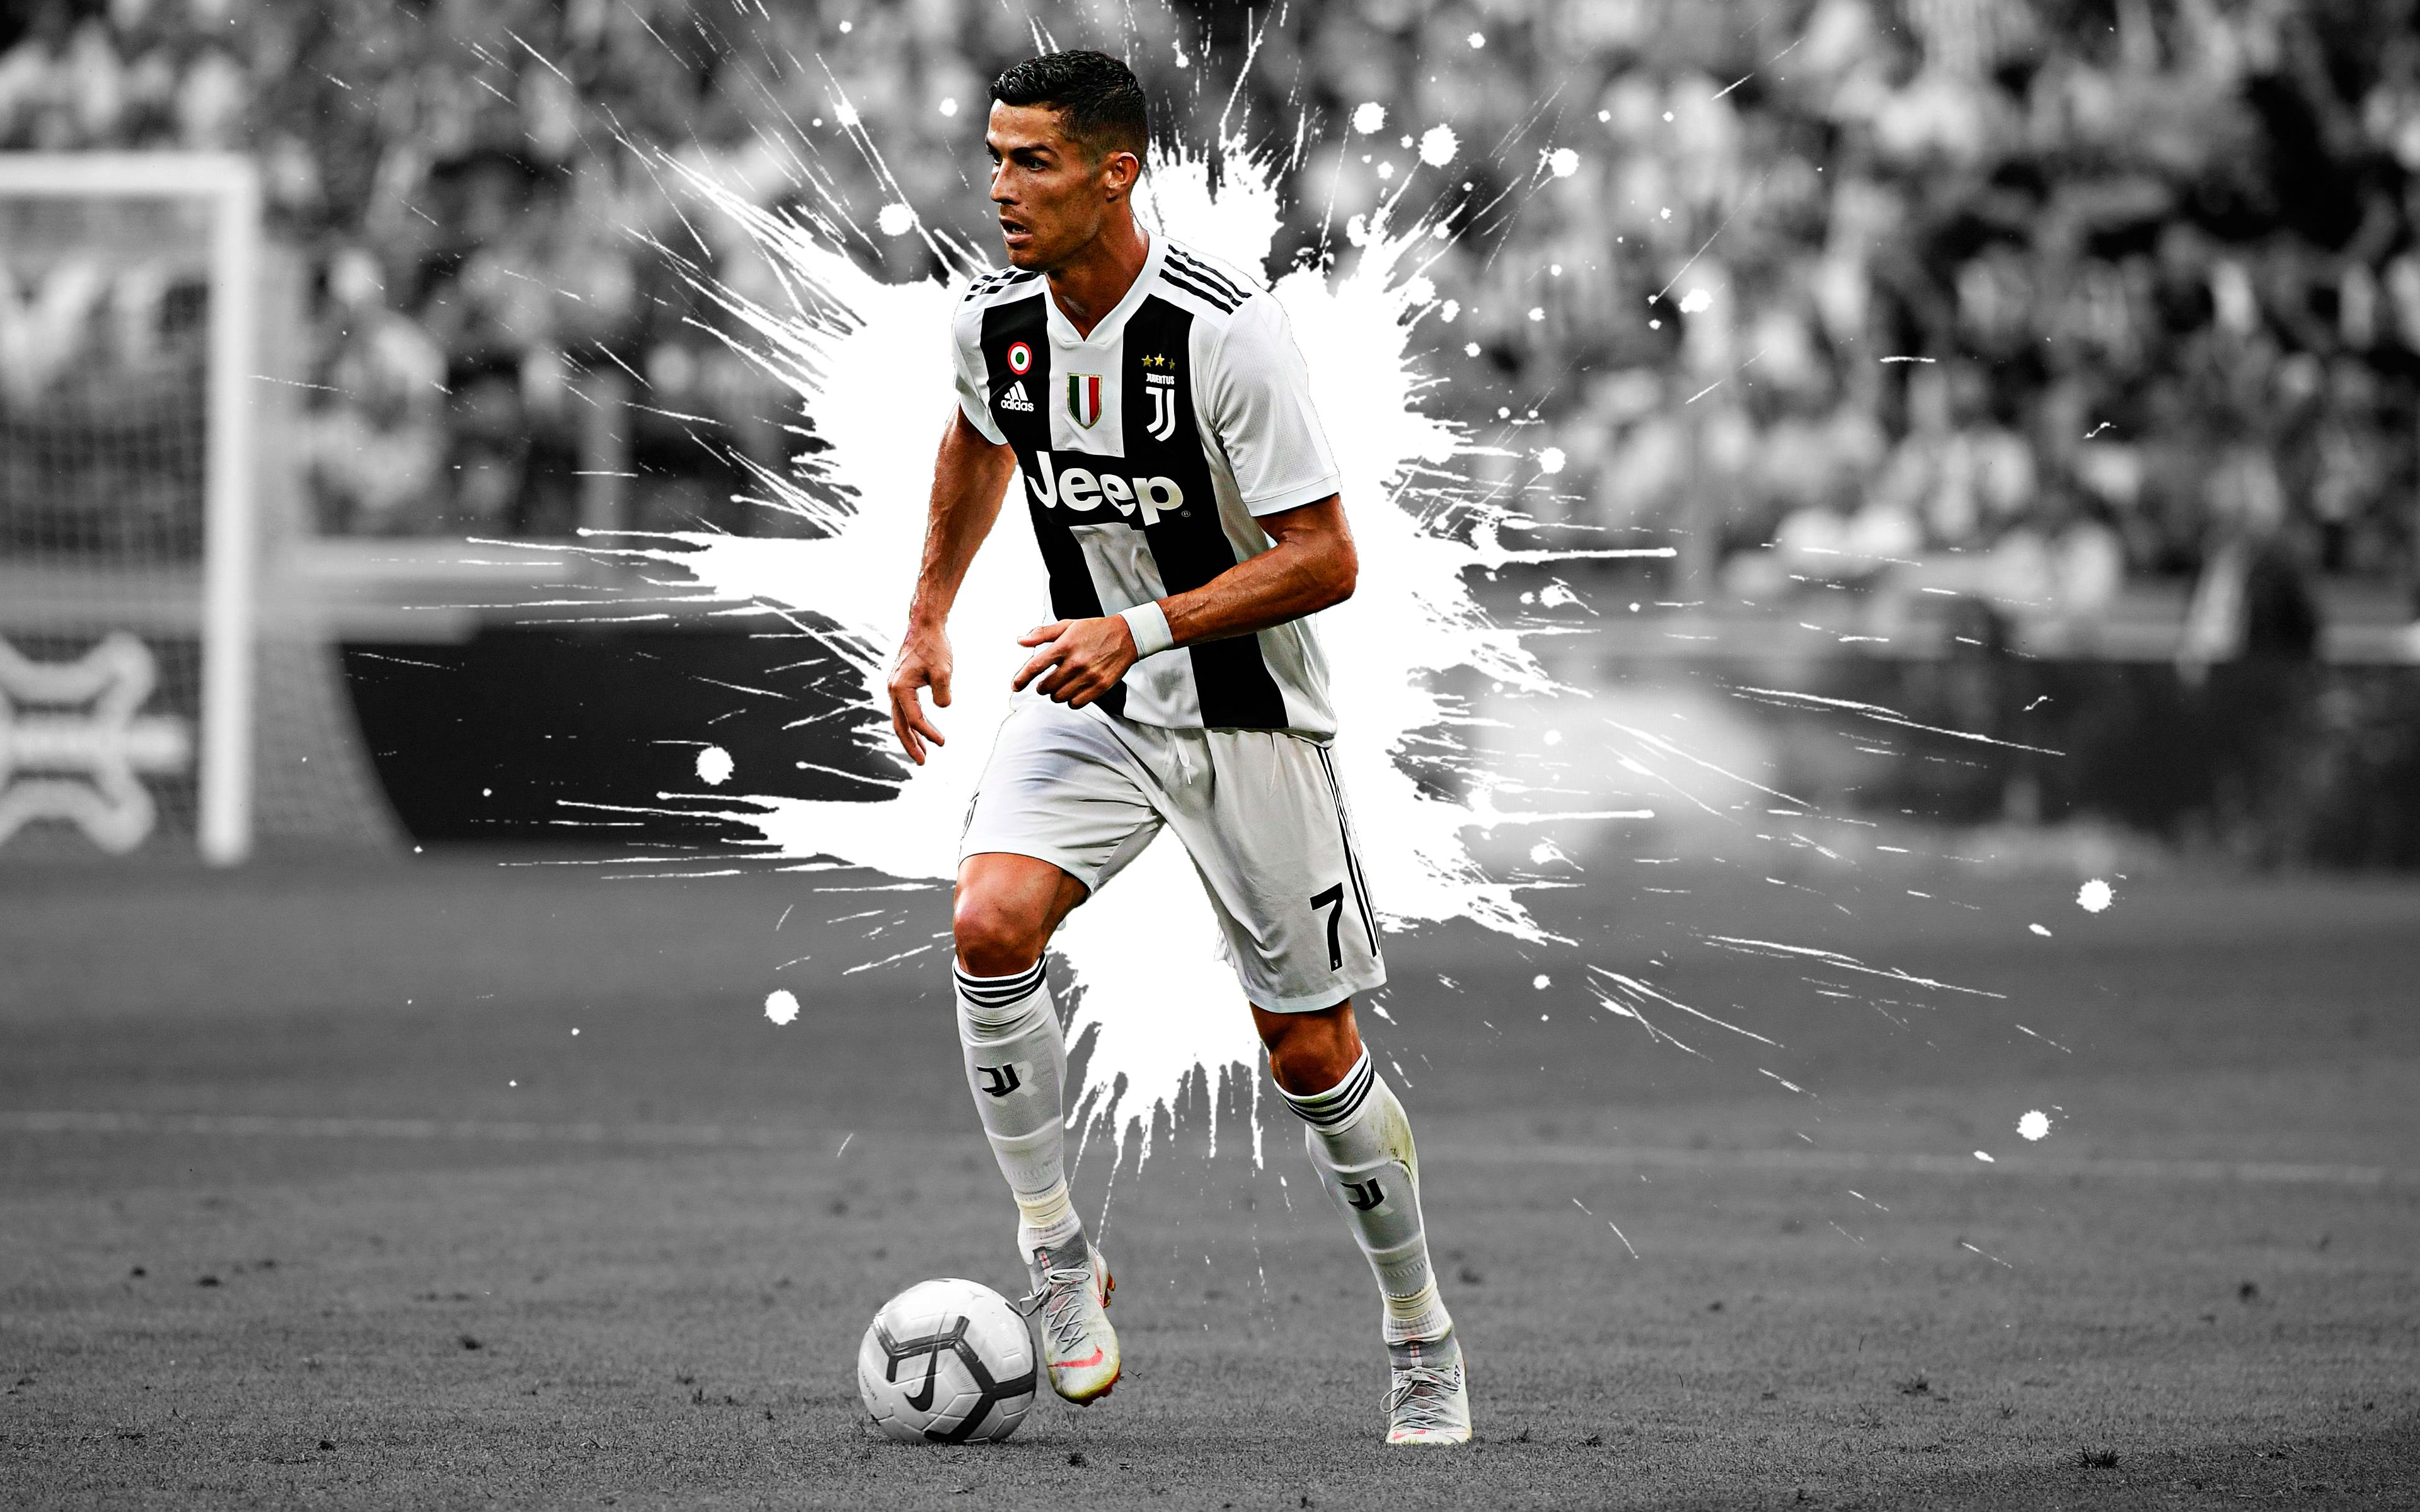 Cristiano Ronaldo 4k Desktop Wallpapers - Wallpaper Cave